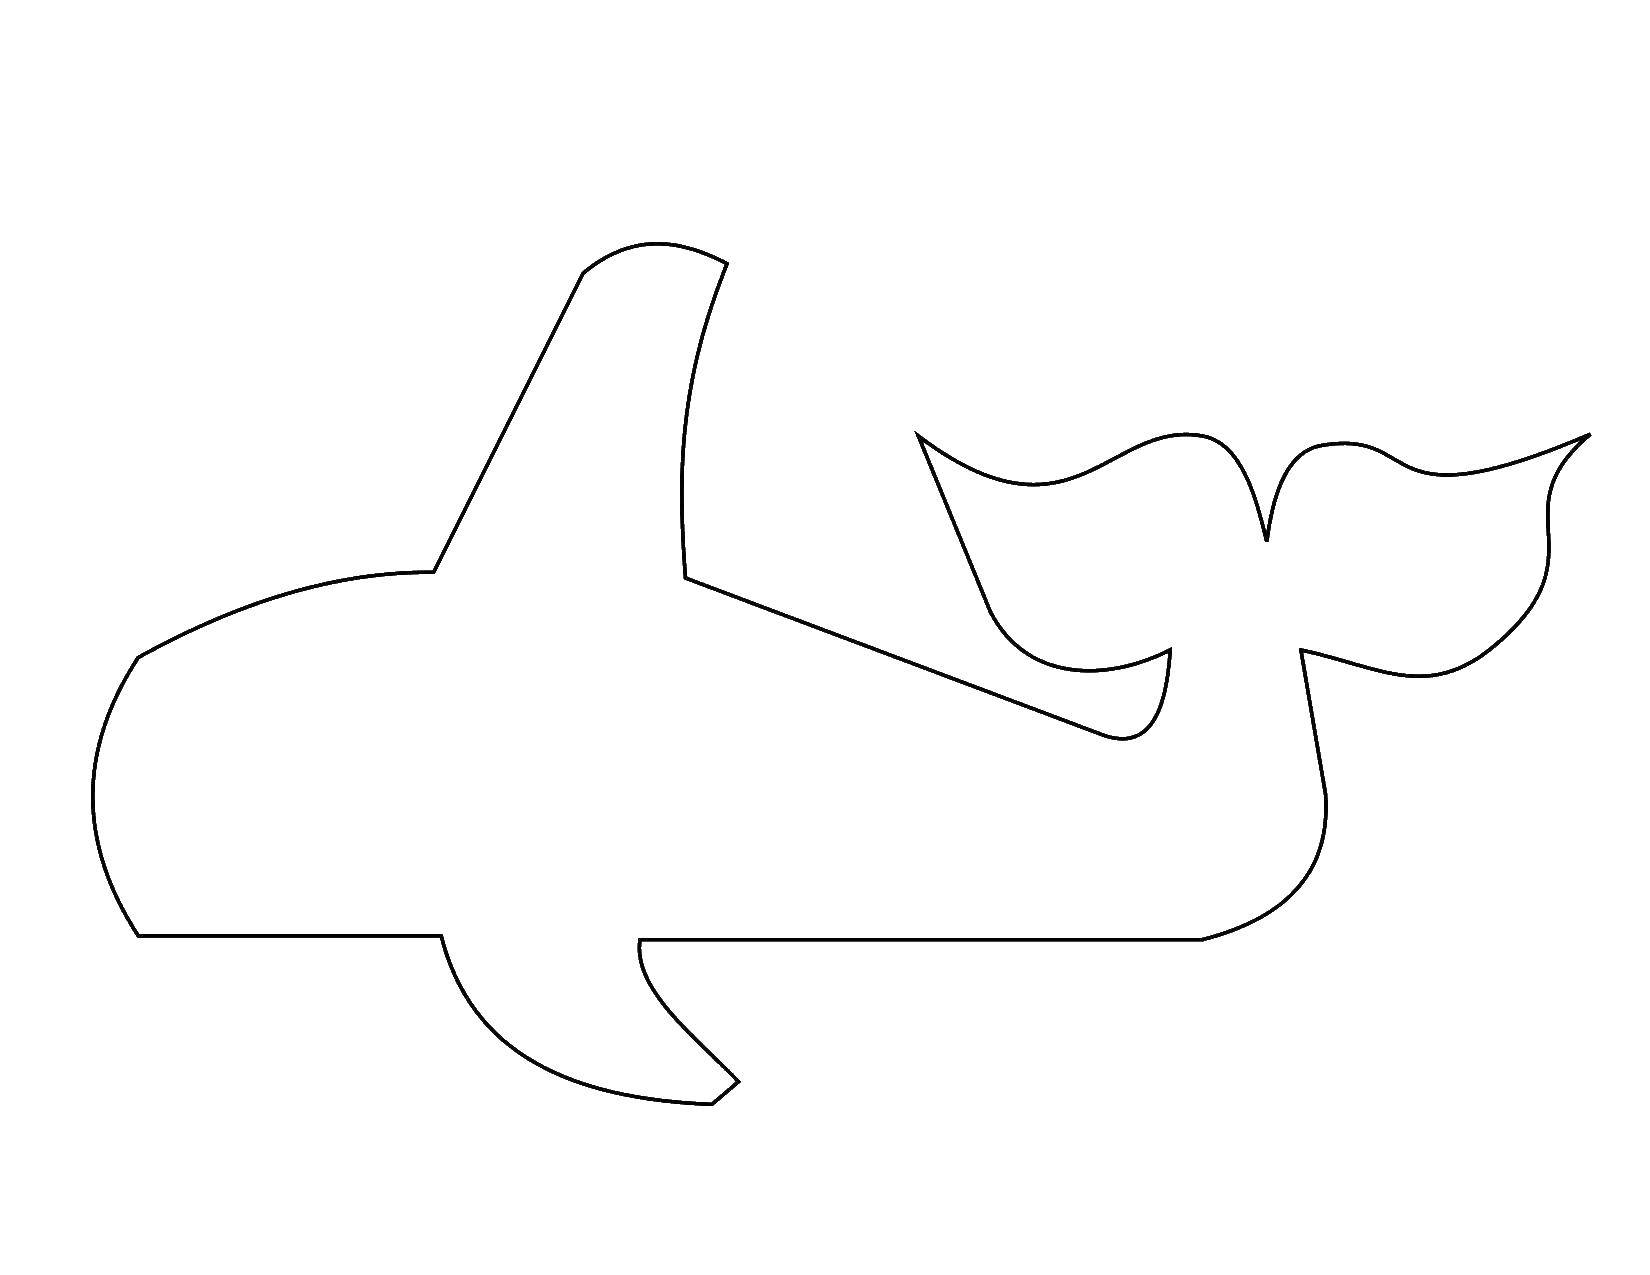 Название: Раскраска Контур акулы. Категория: Контуры рыб. Теги: рыбы, контуры, акула.